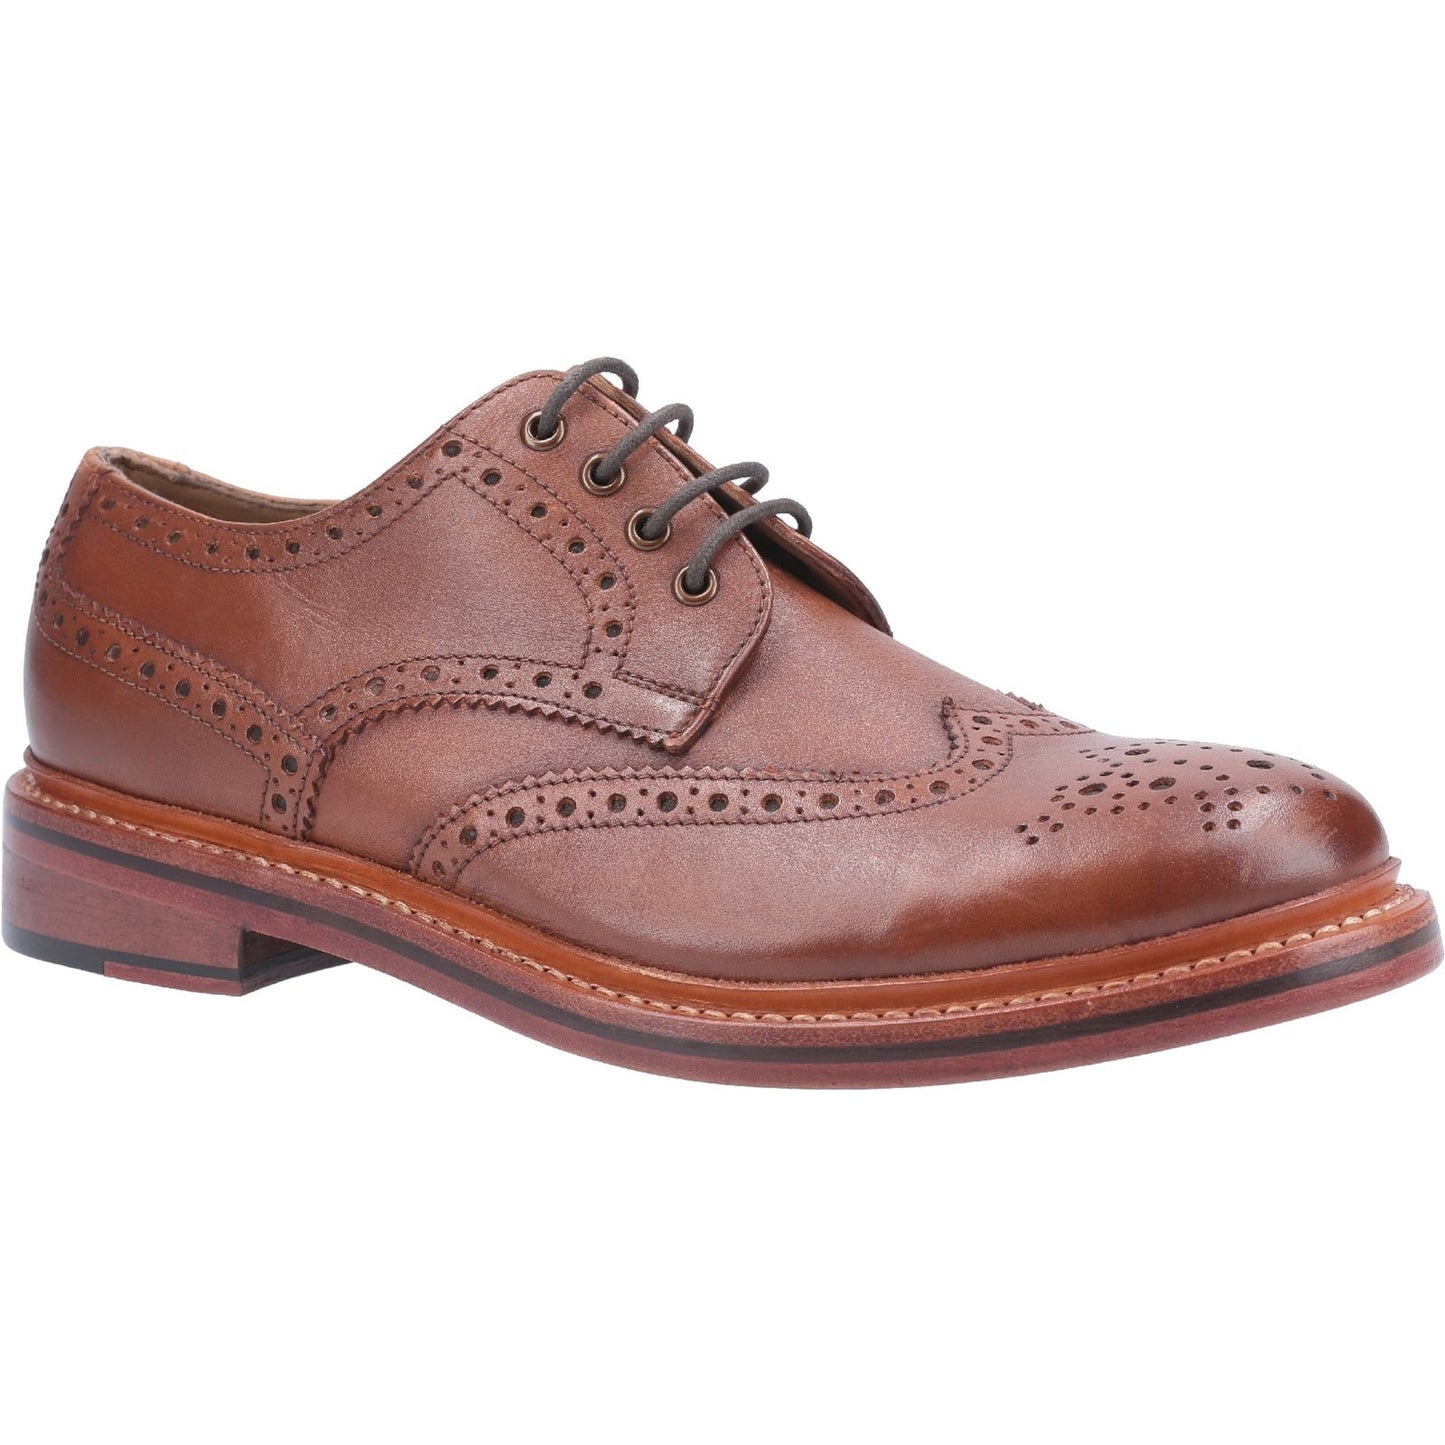 Quenington Leather Goodyear Welt Shoe, Cotswold